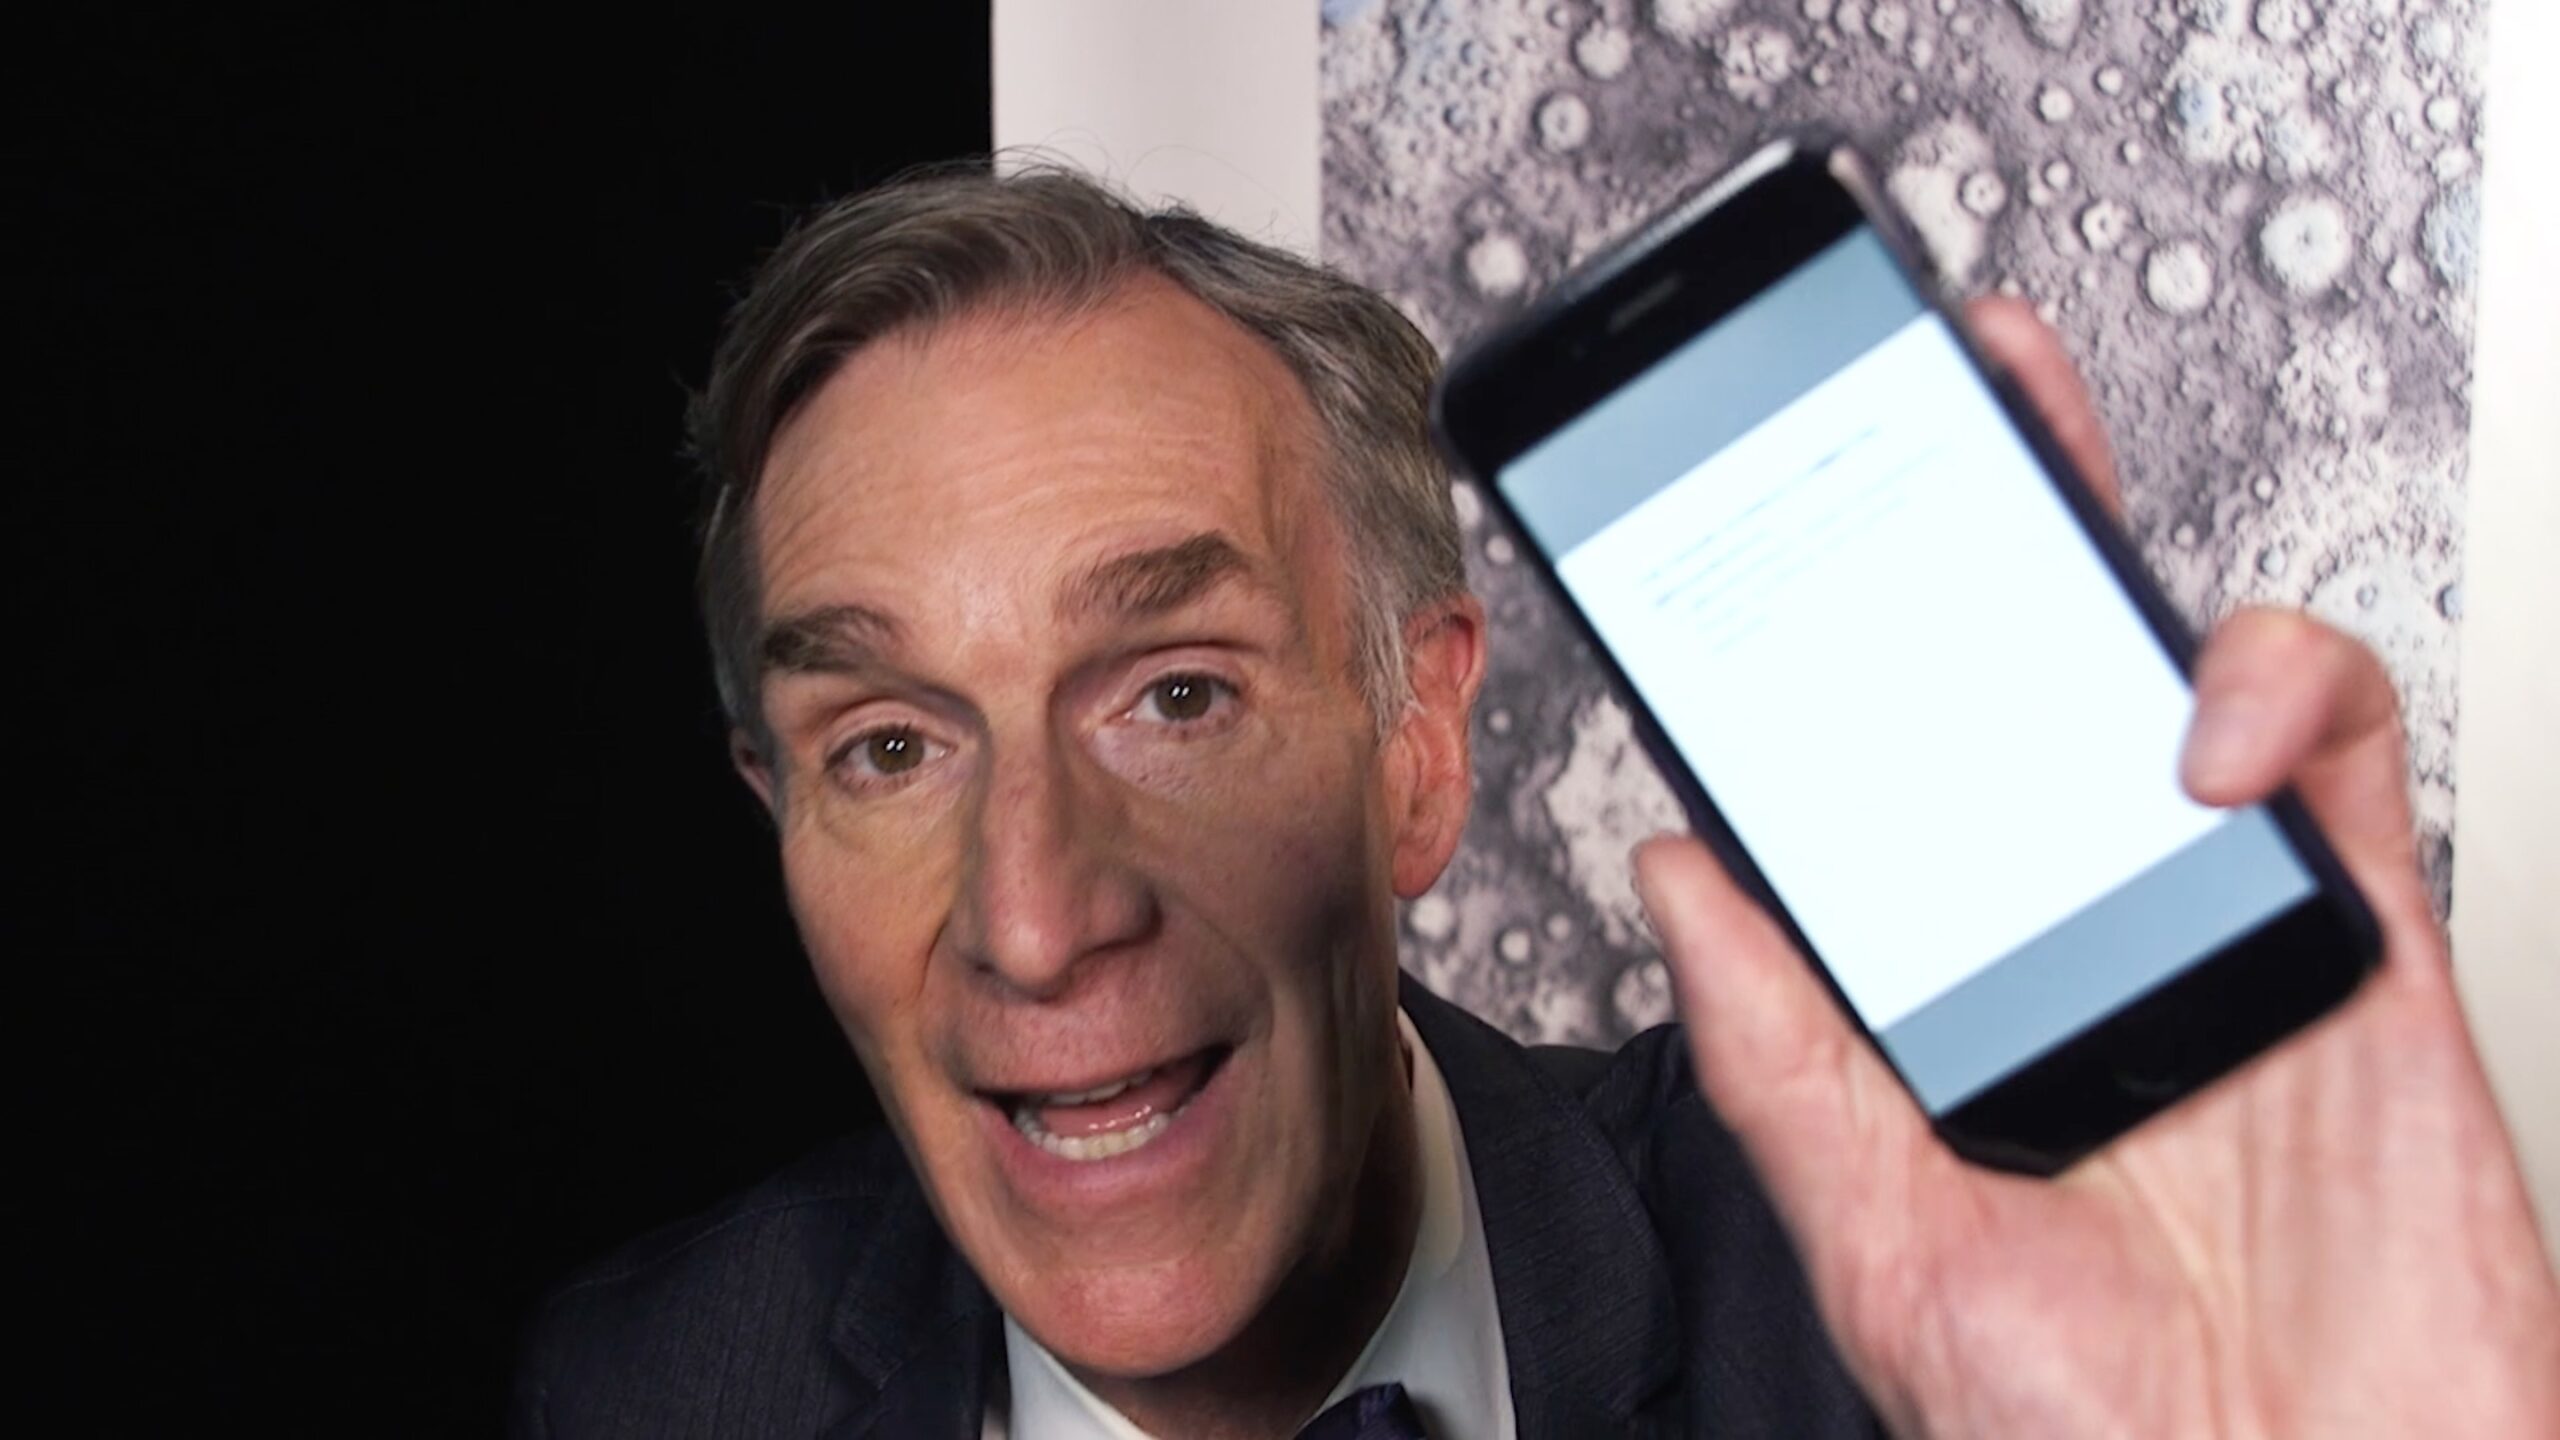 Watch Bill Nye respond to anti-science tweets